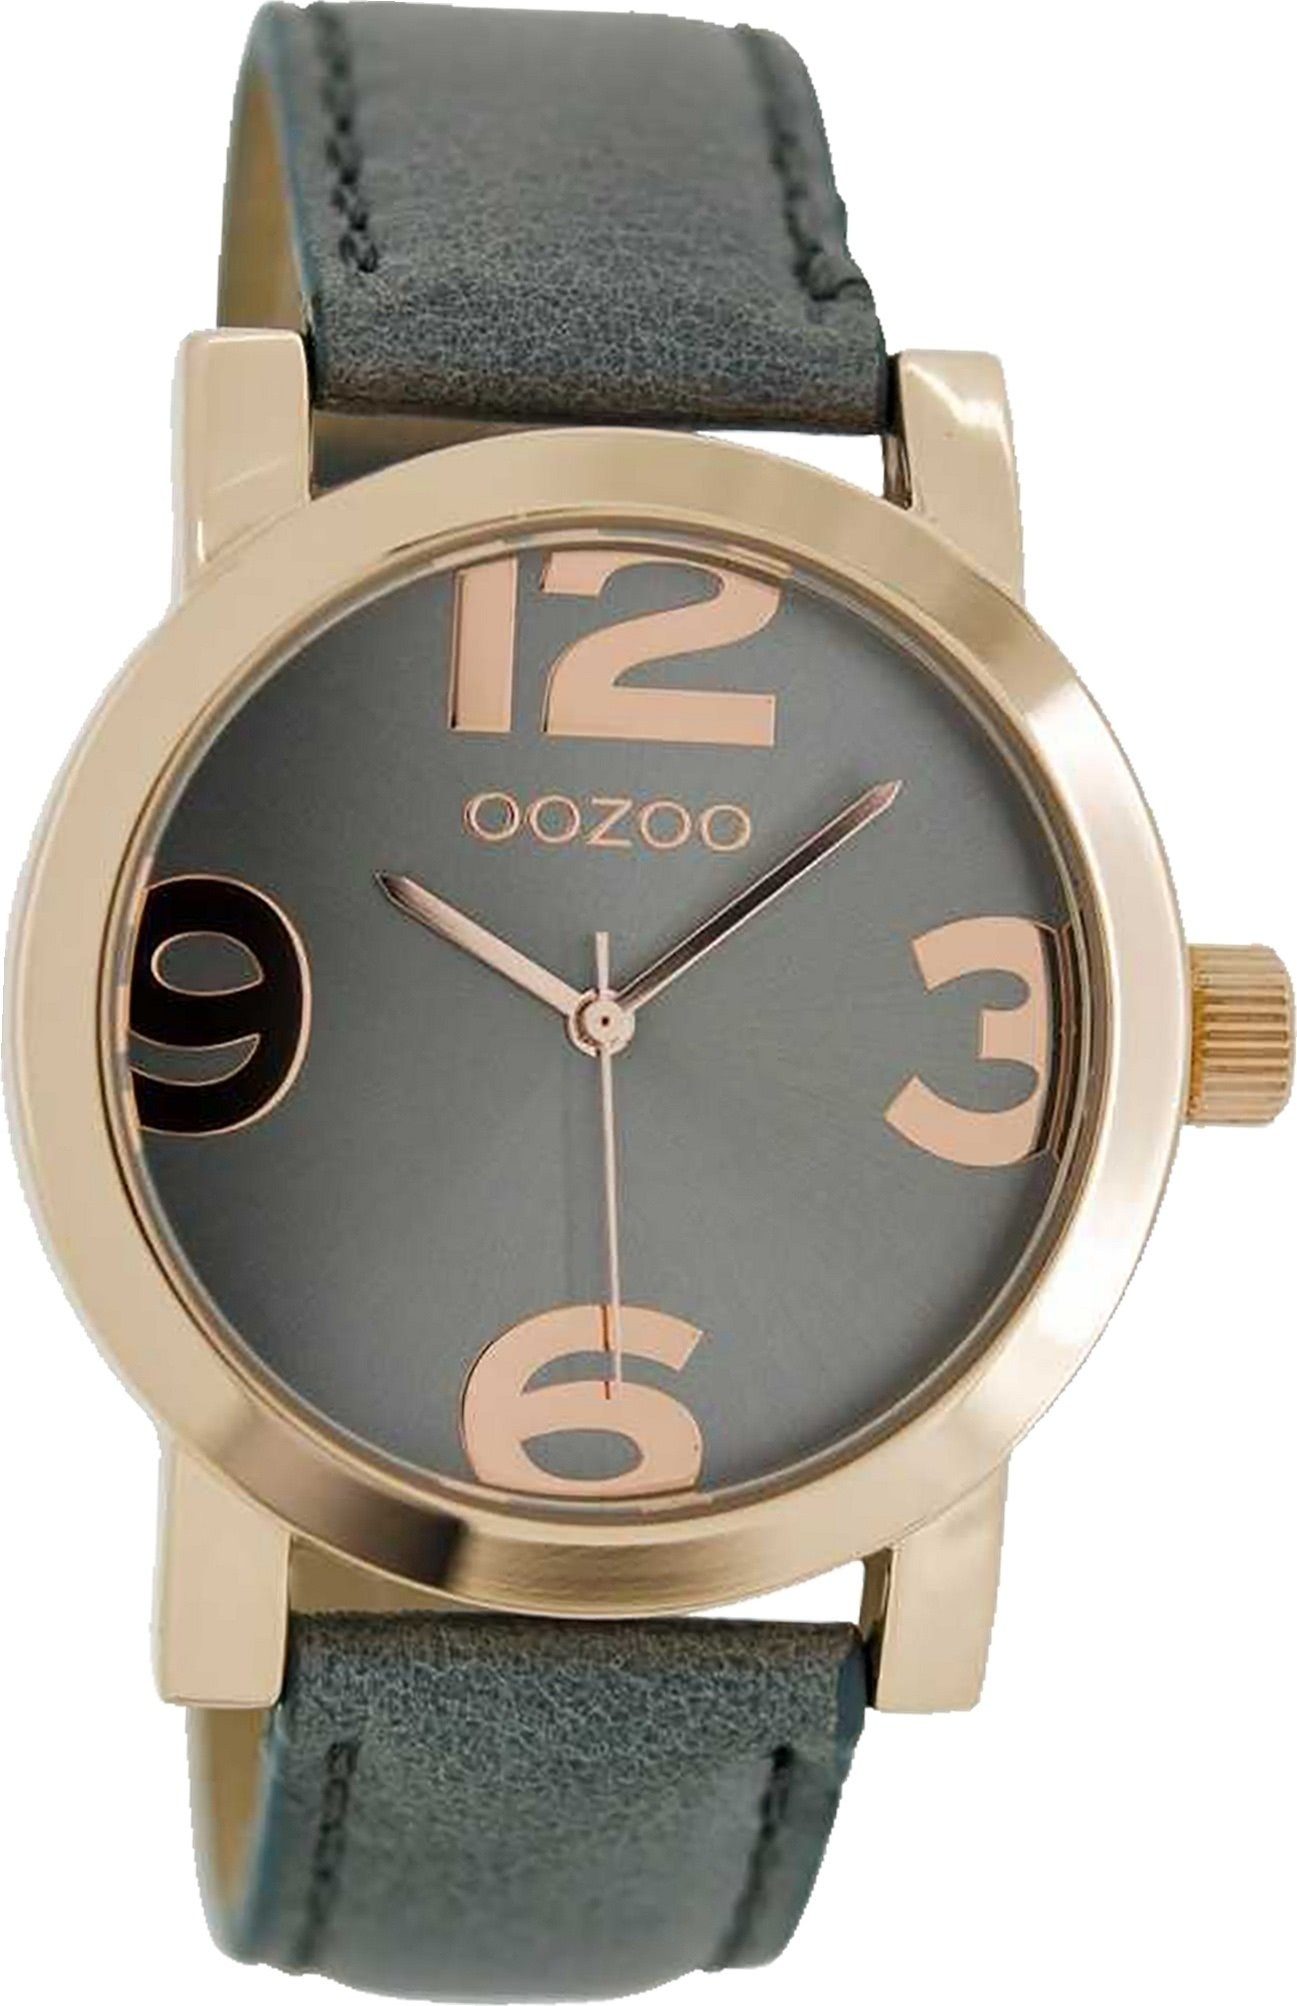 OOZOO Quarzuhr Oozoo Quarz-Uhr Damen rose Timepieces, Damenuhr Lederarmband grau, rundes Gehäuse, groß (ca. 40mm)